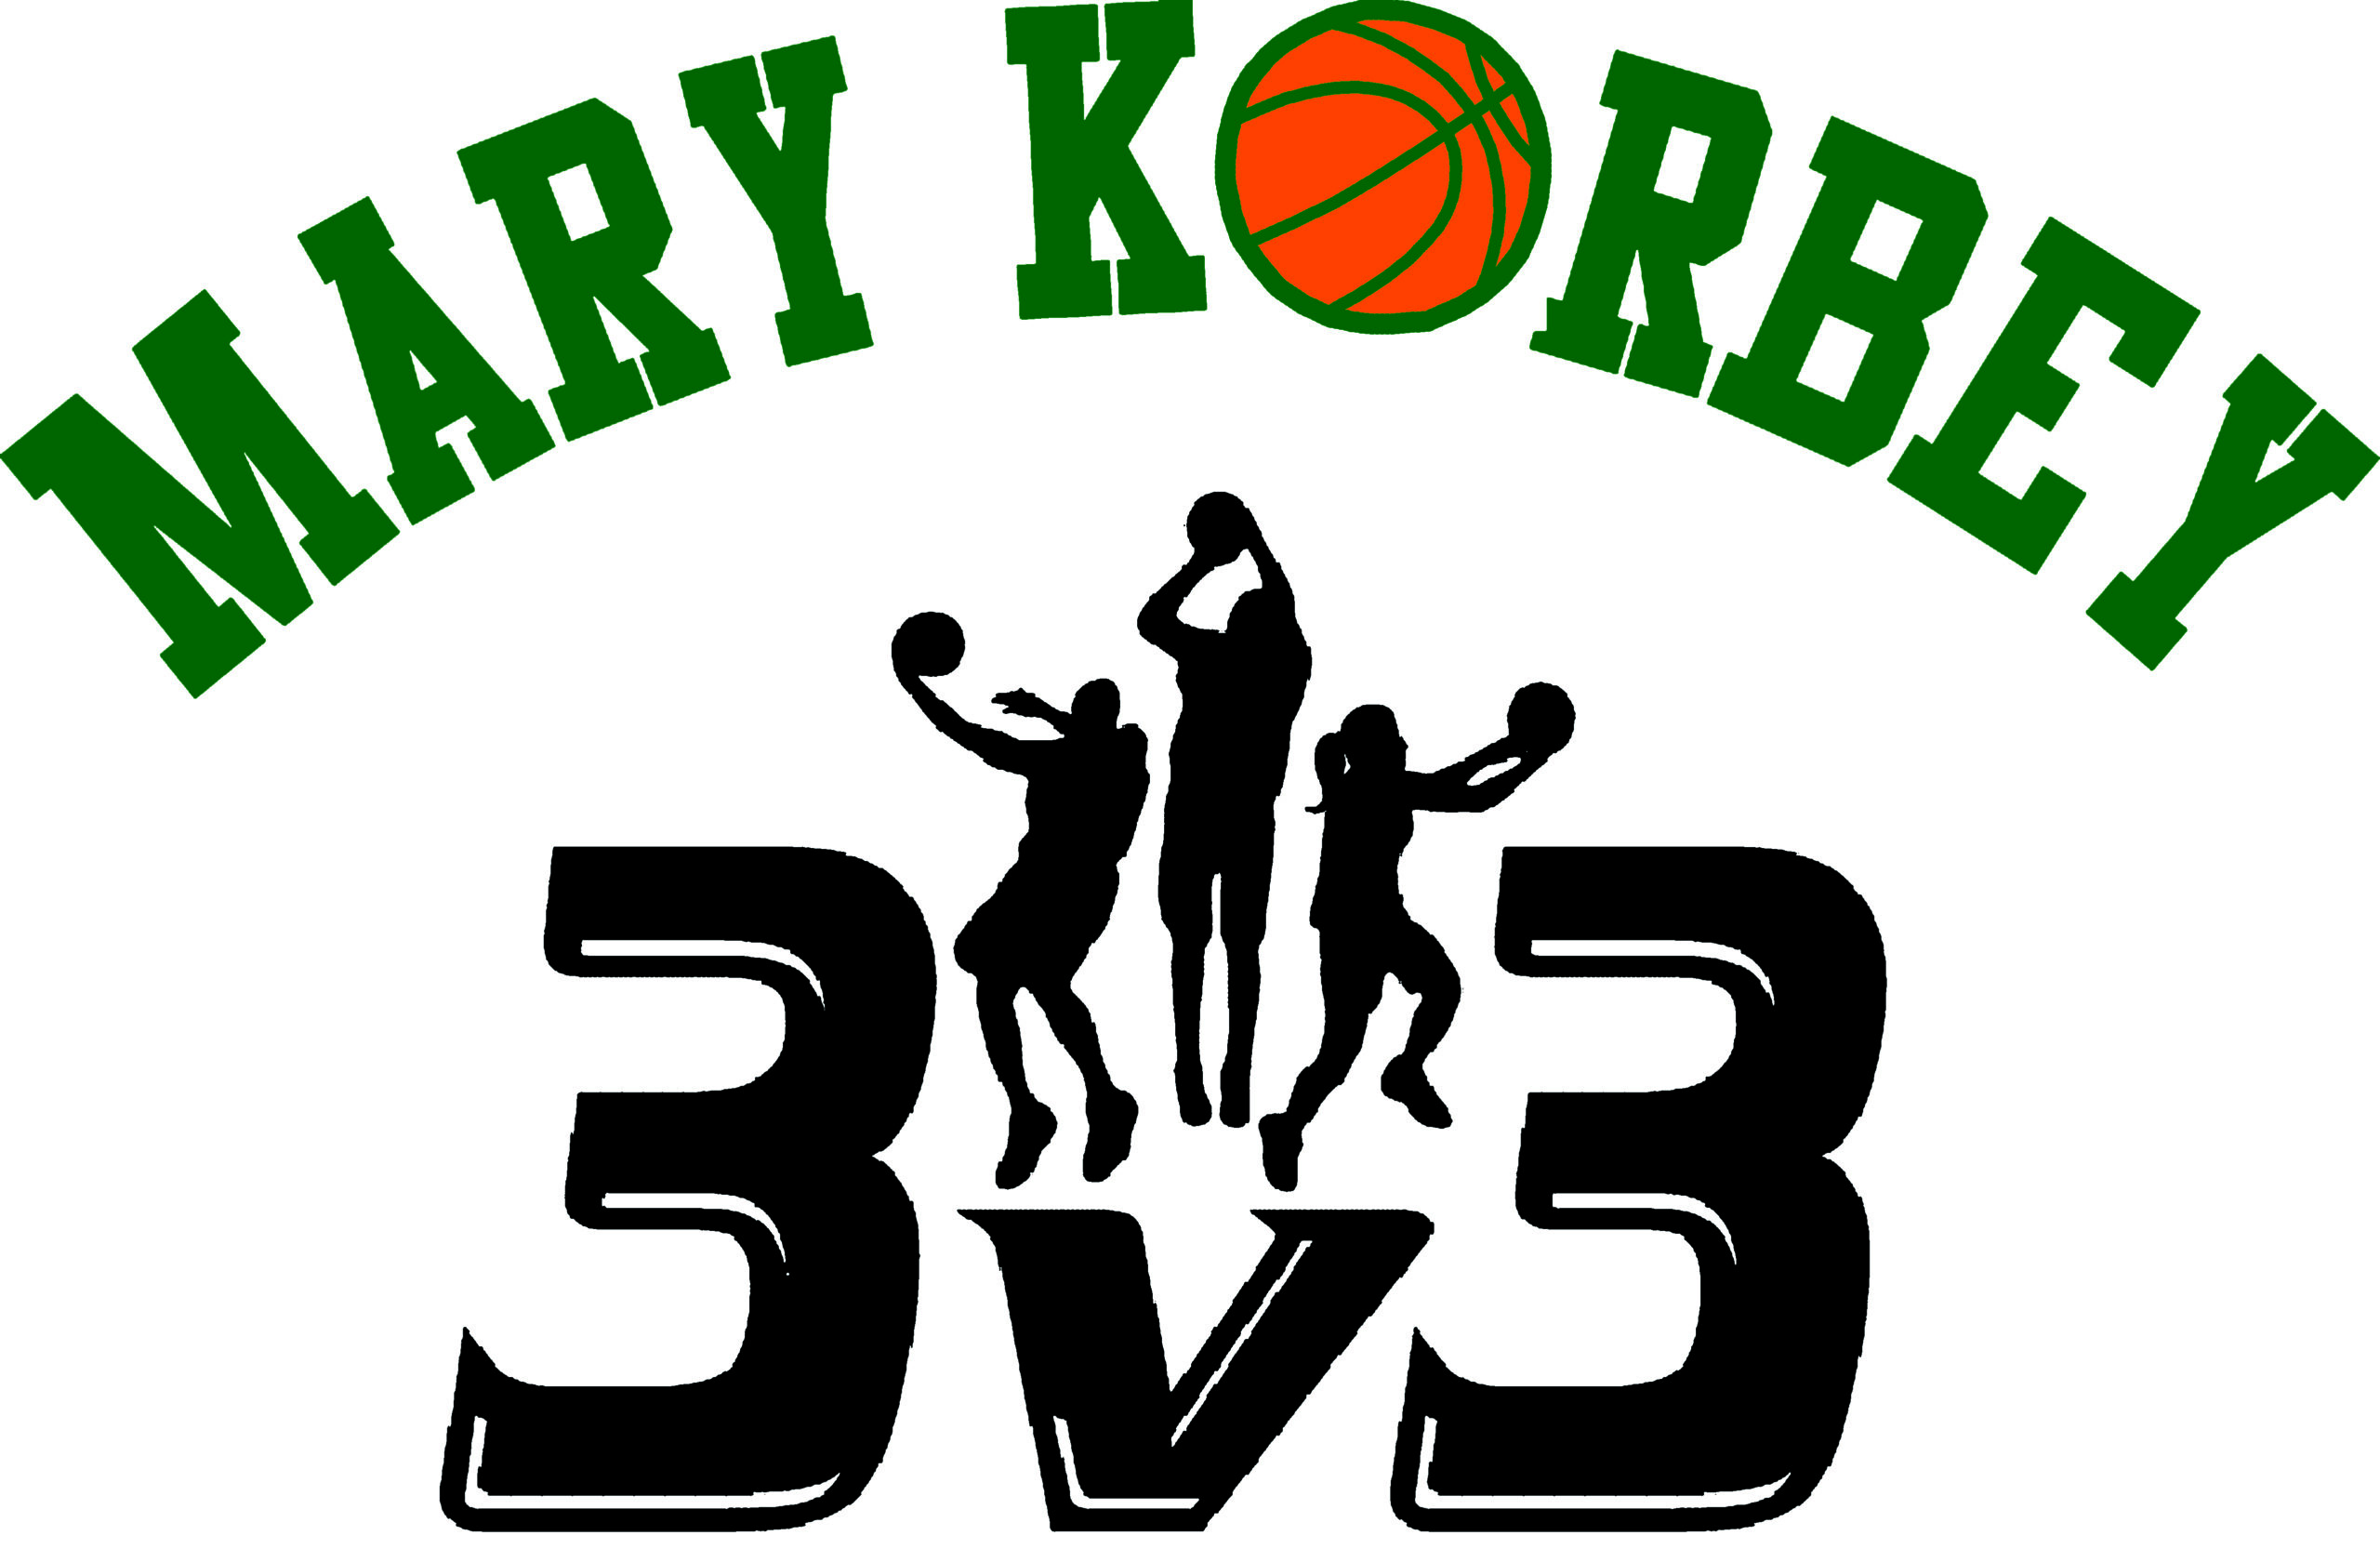 Mary Korbey 3v3 logo